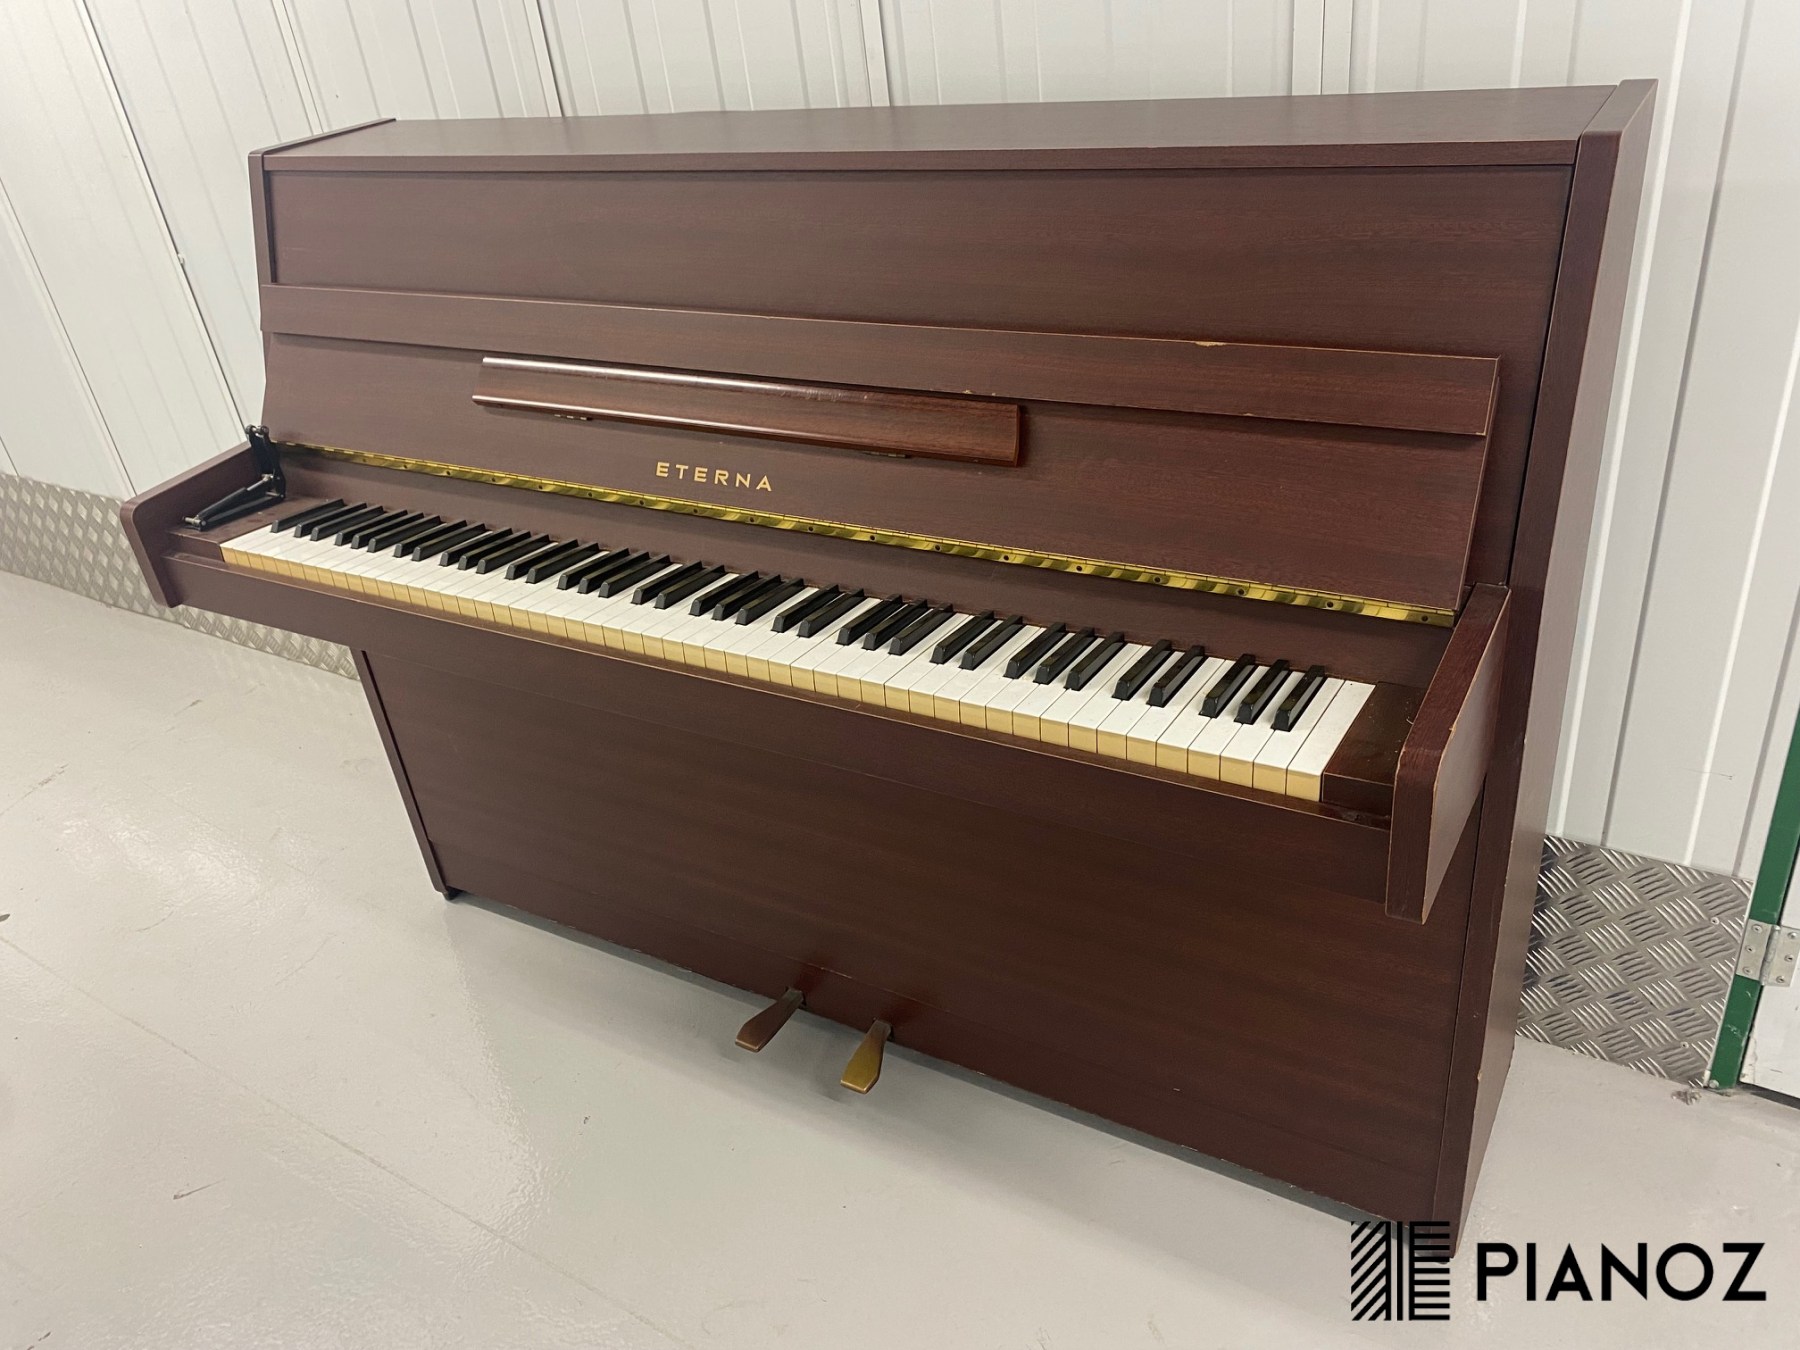 Yamaha Eterna Upright Piano for sale UK | P I A N O Z - The